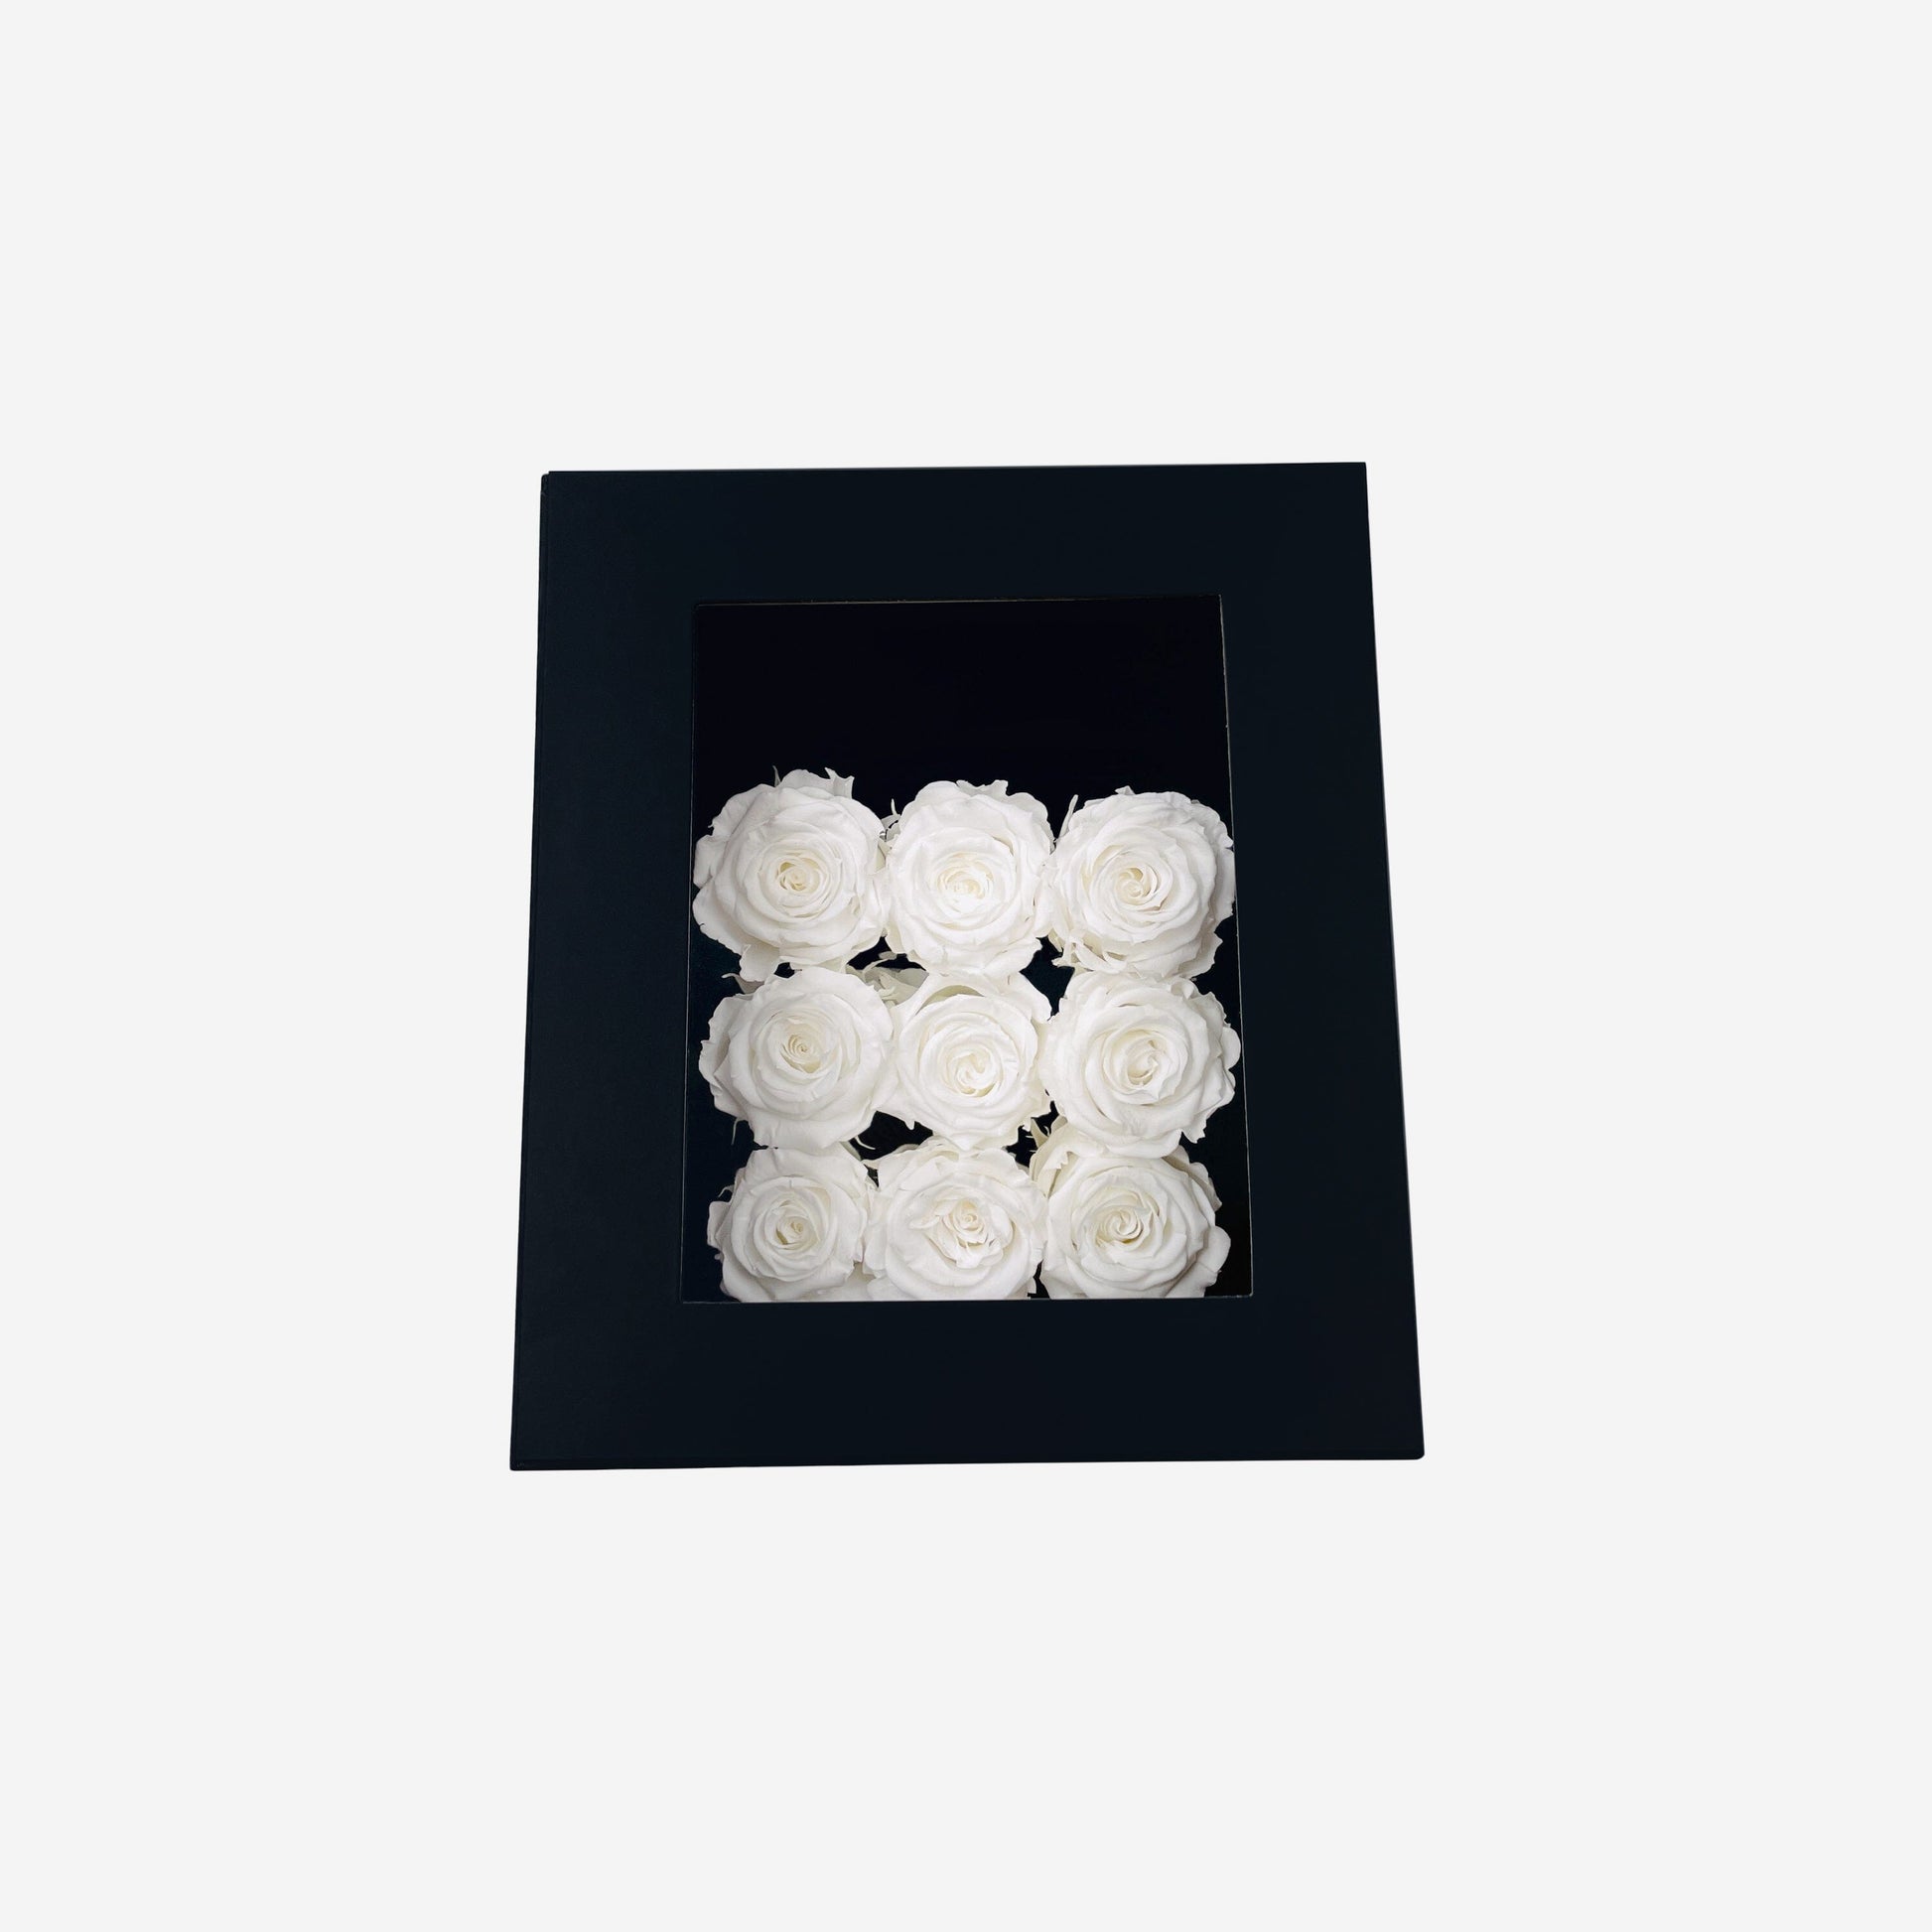 Trapezoid Black Box | White Roses - The Million Roses